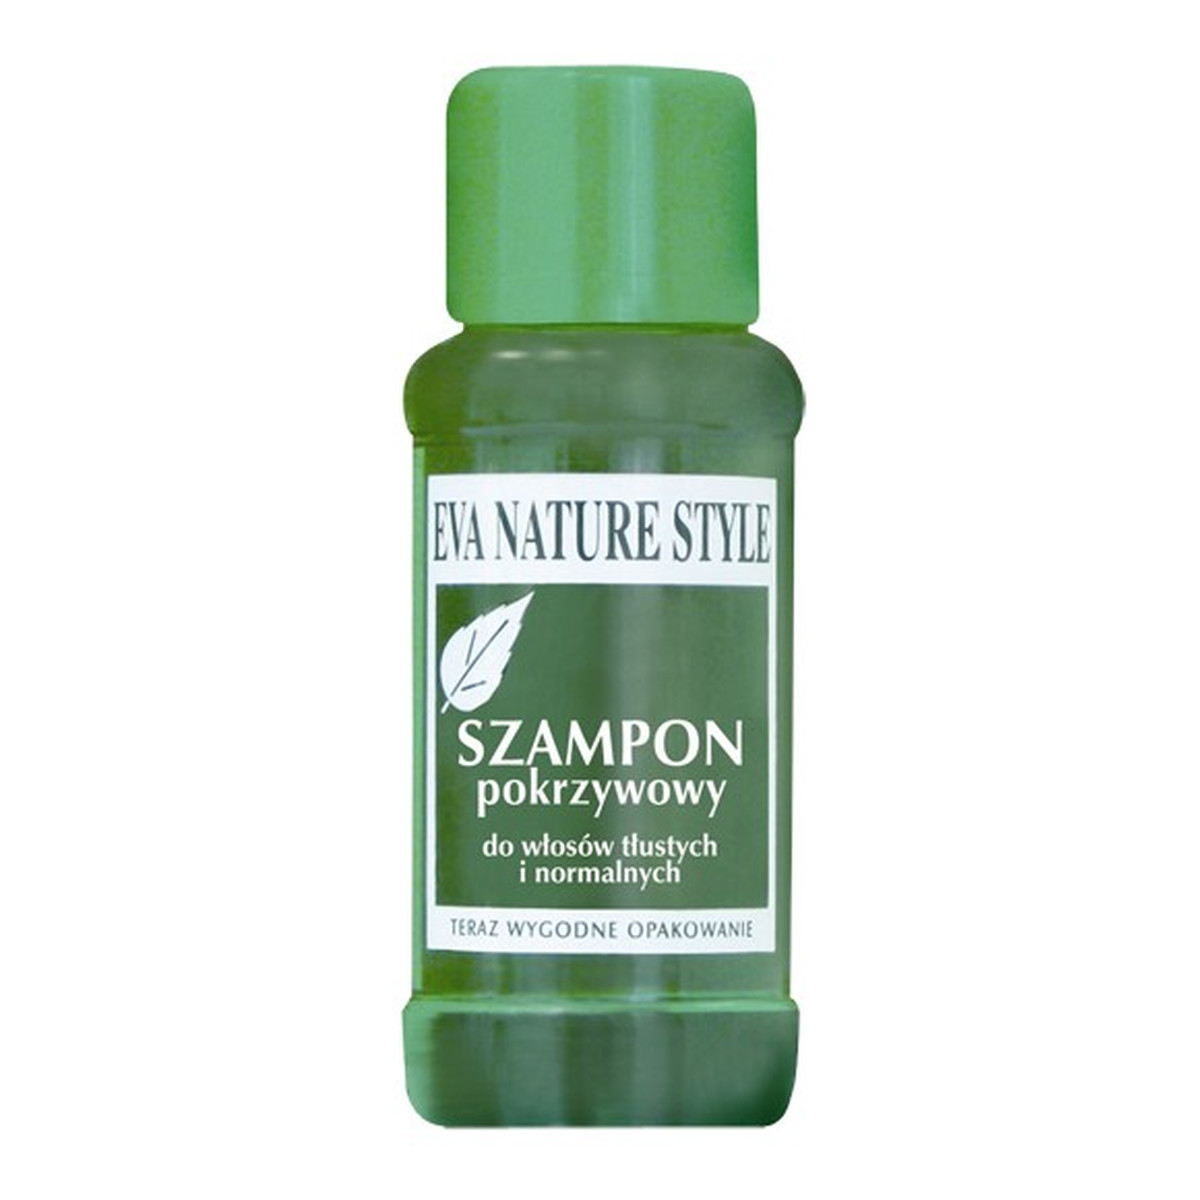 eva nature style szampon pokrzywowy